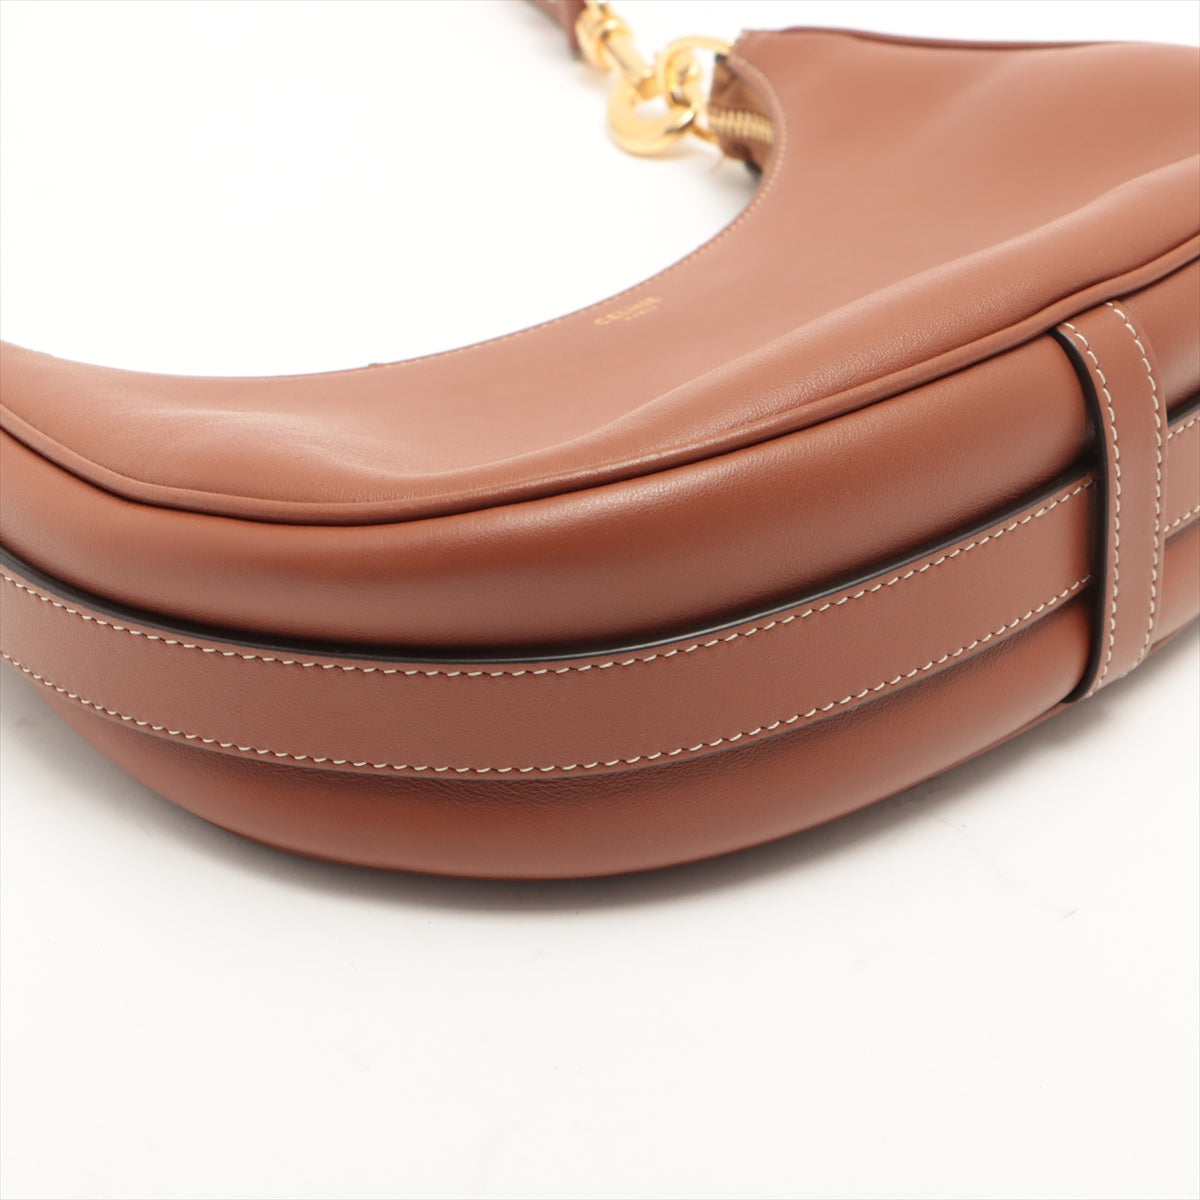 Ava leather crossbody bag Celine Black in Leather - 33201659